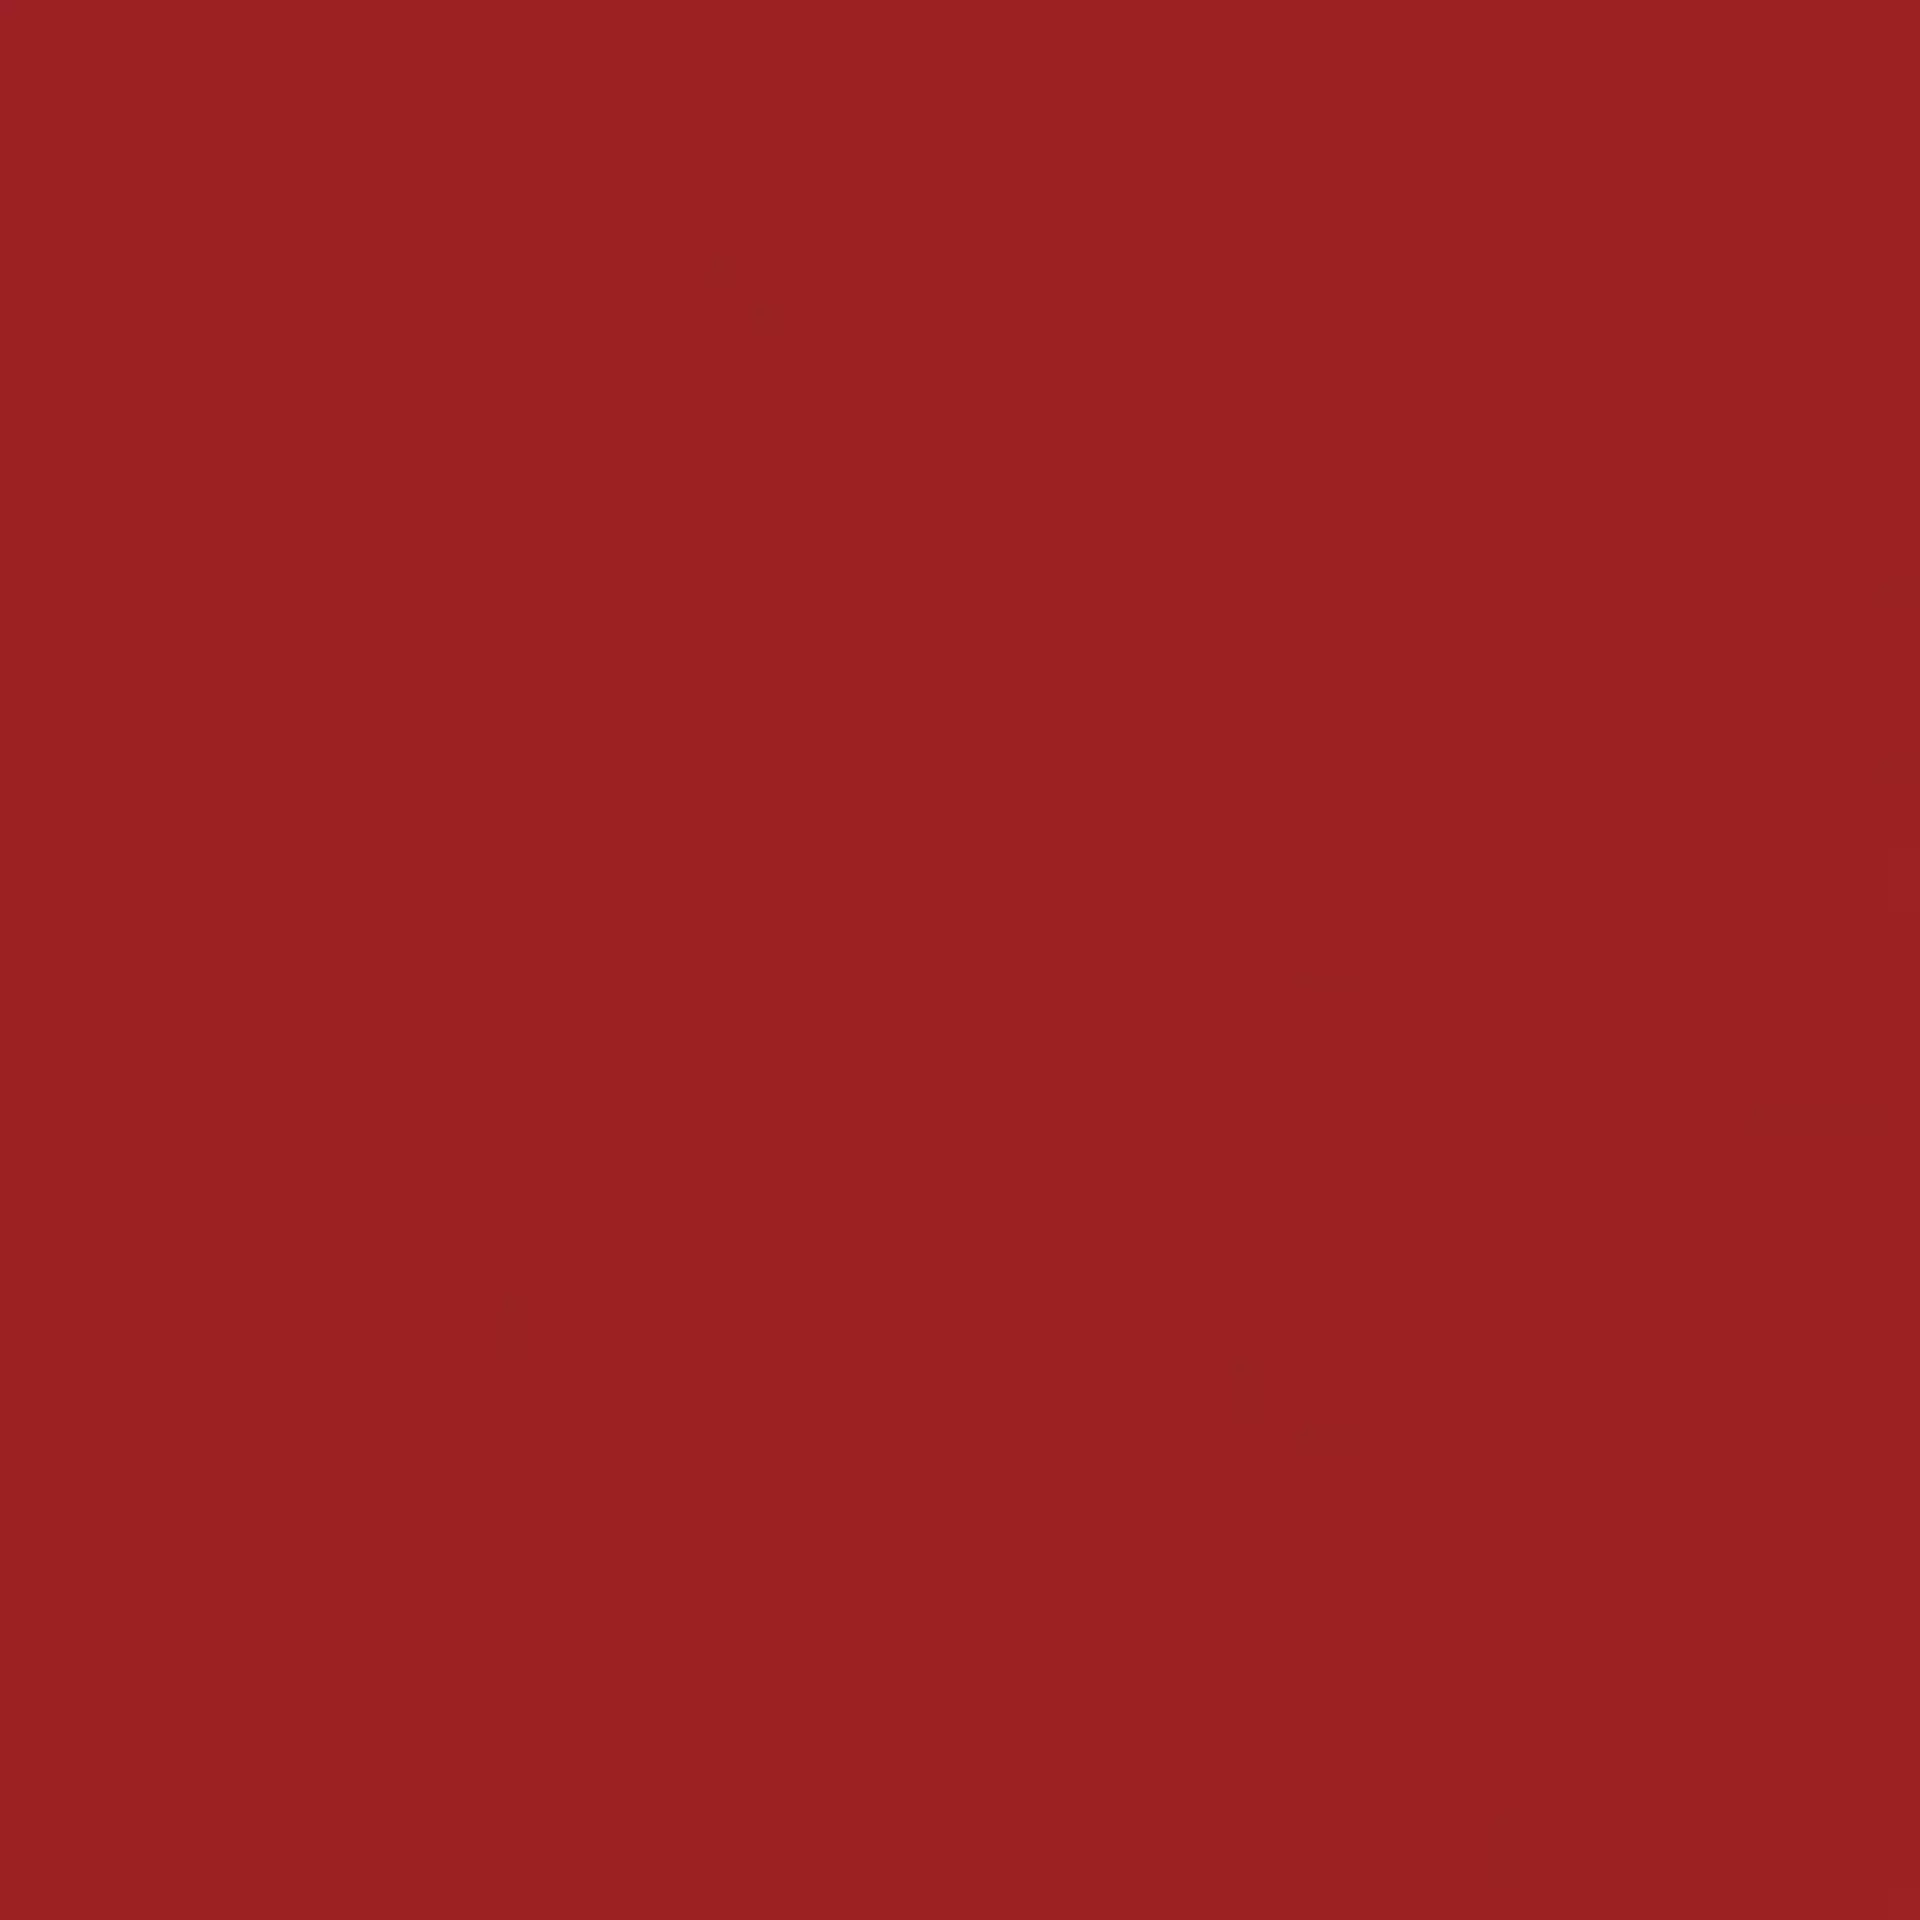 Wandfliese Villeroy & Boch Pro Architectura 3.0 Red Chili Glossy Red Chili 1190-C130 glaenzend 20x20cm 6mm